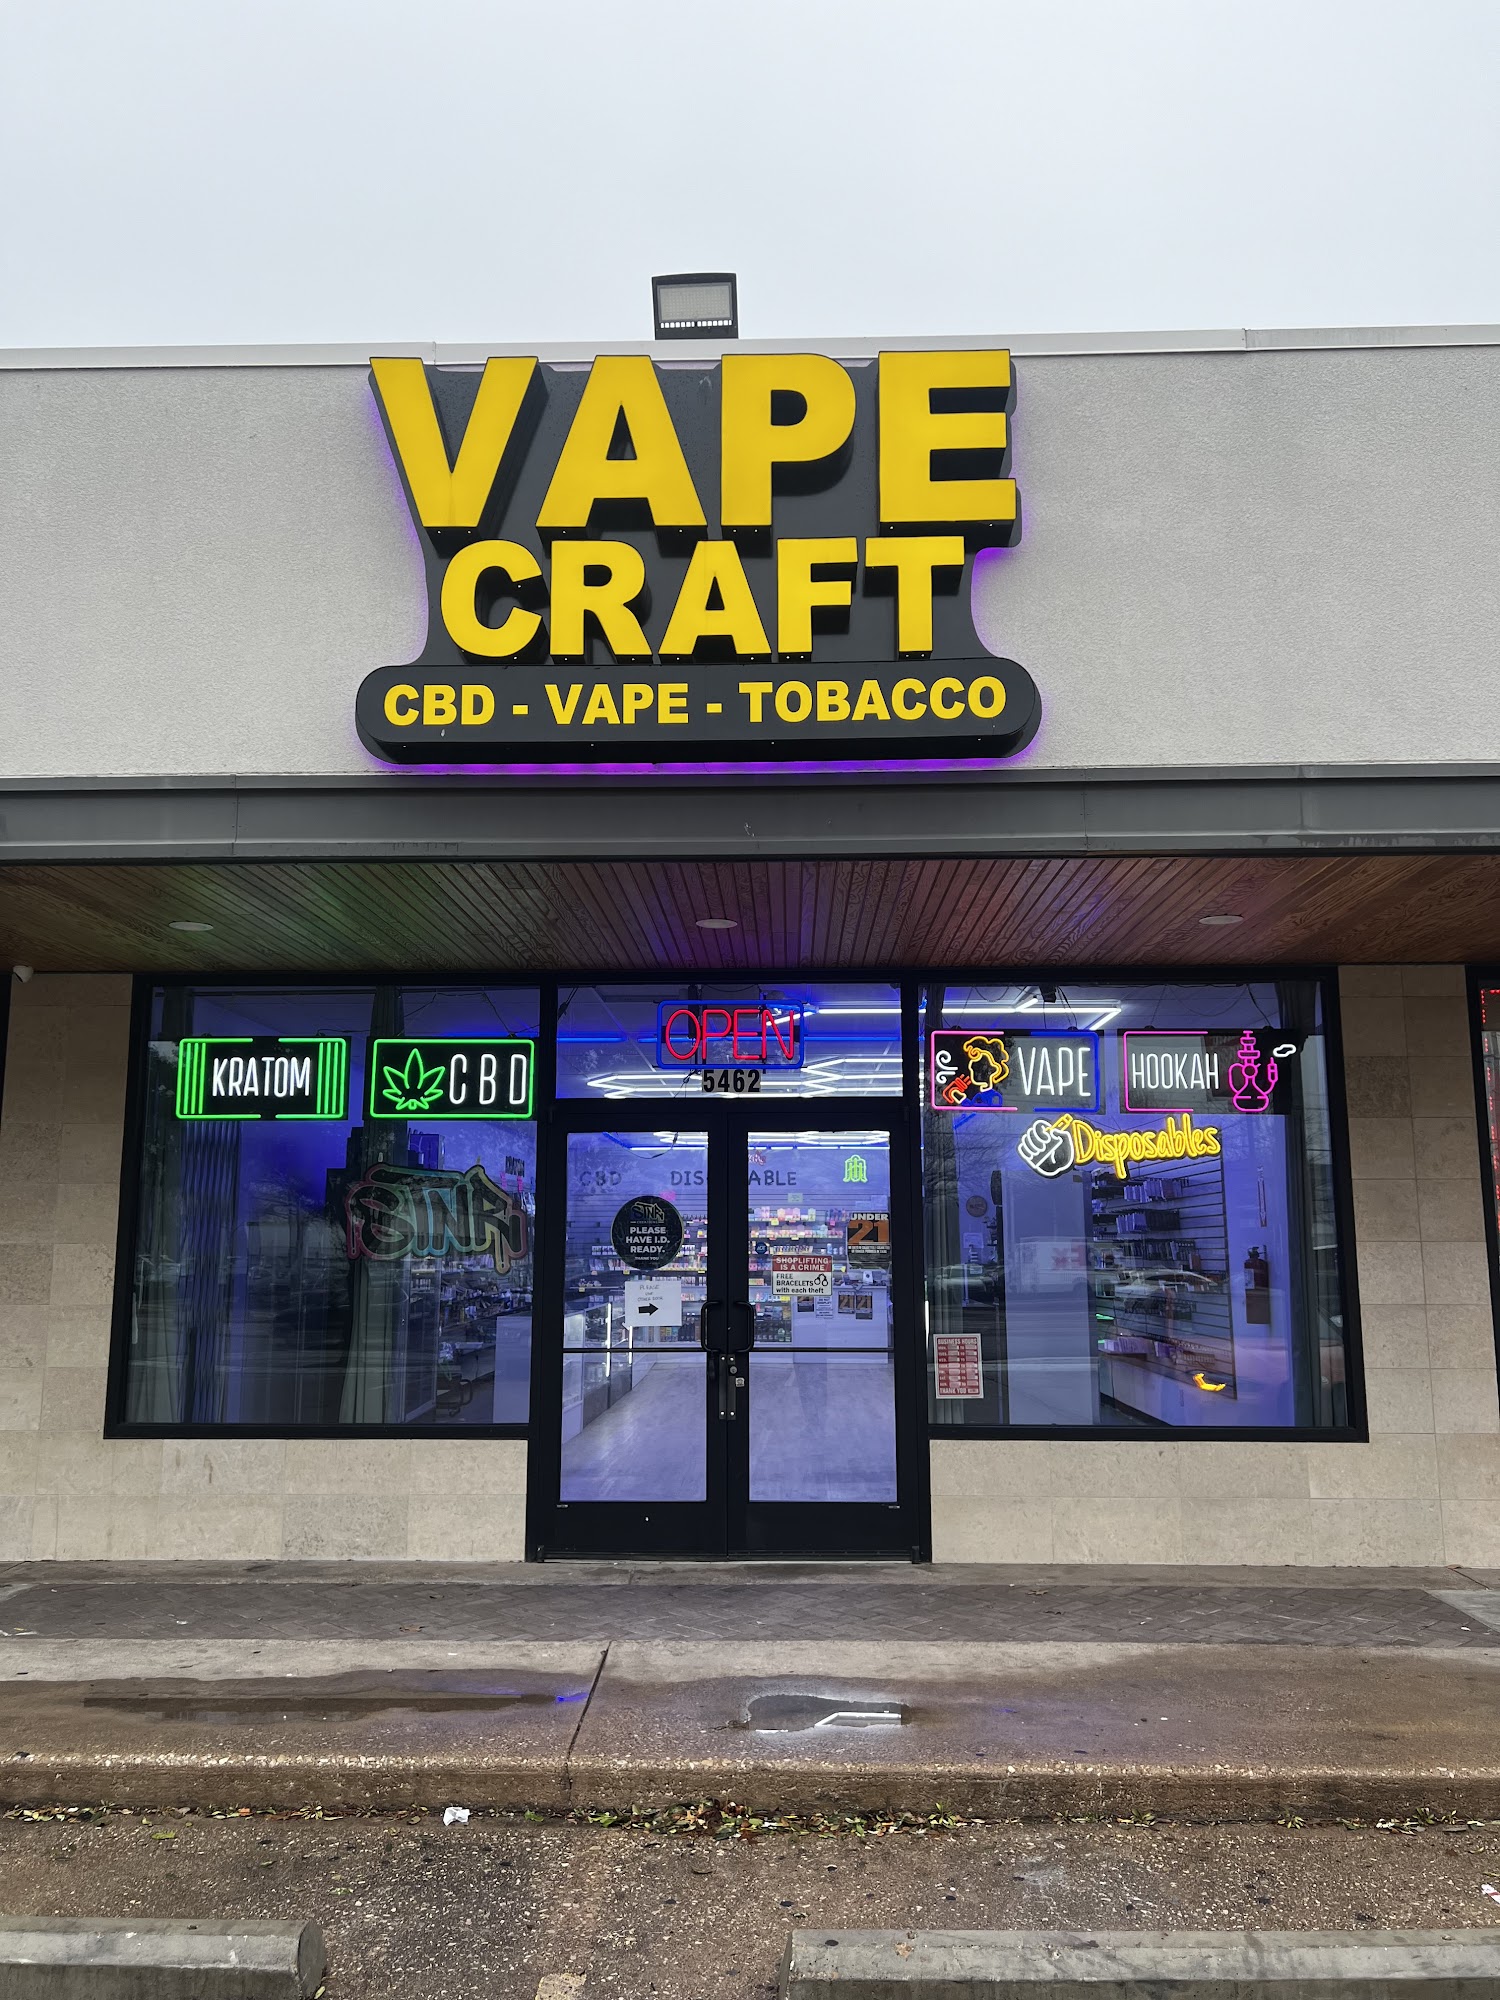 Vape Craft Dallas - Kratom - Delta 8 - CBD - Best Vape Smoke Shop near me